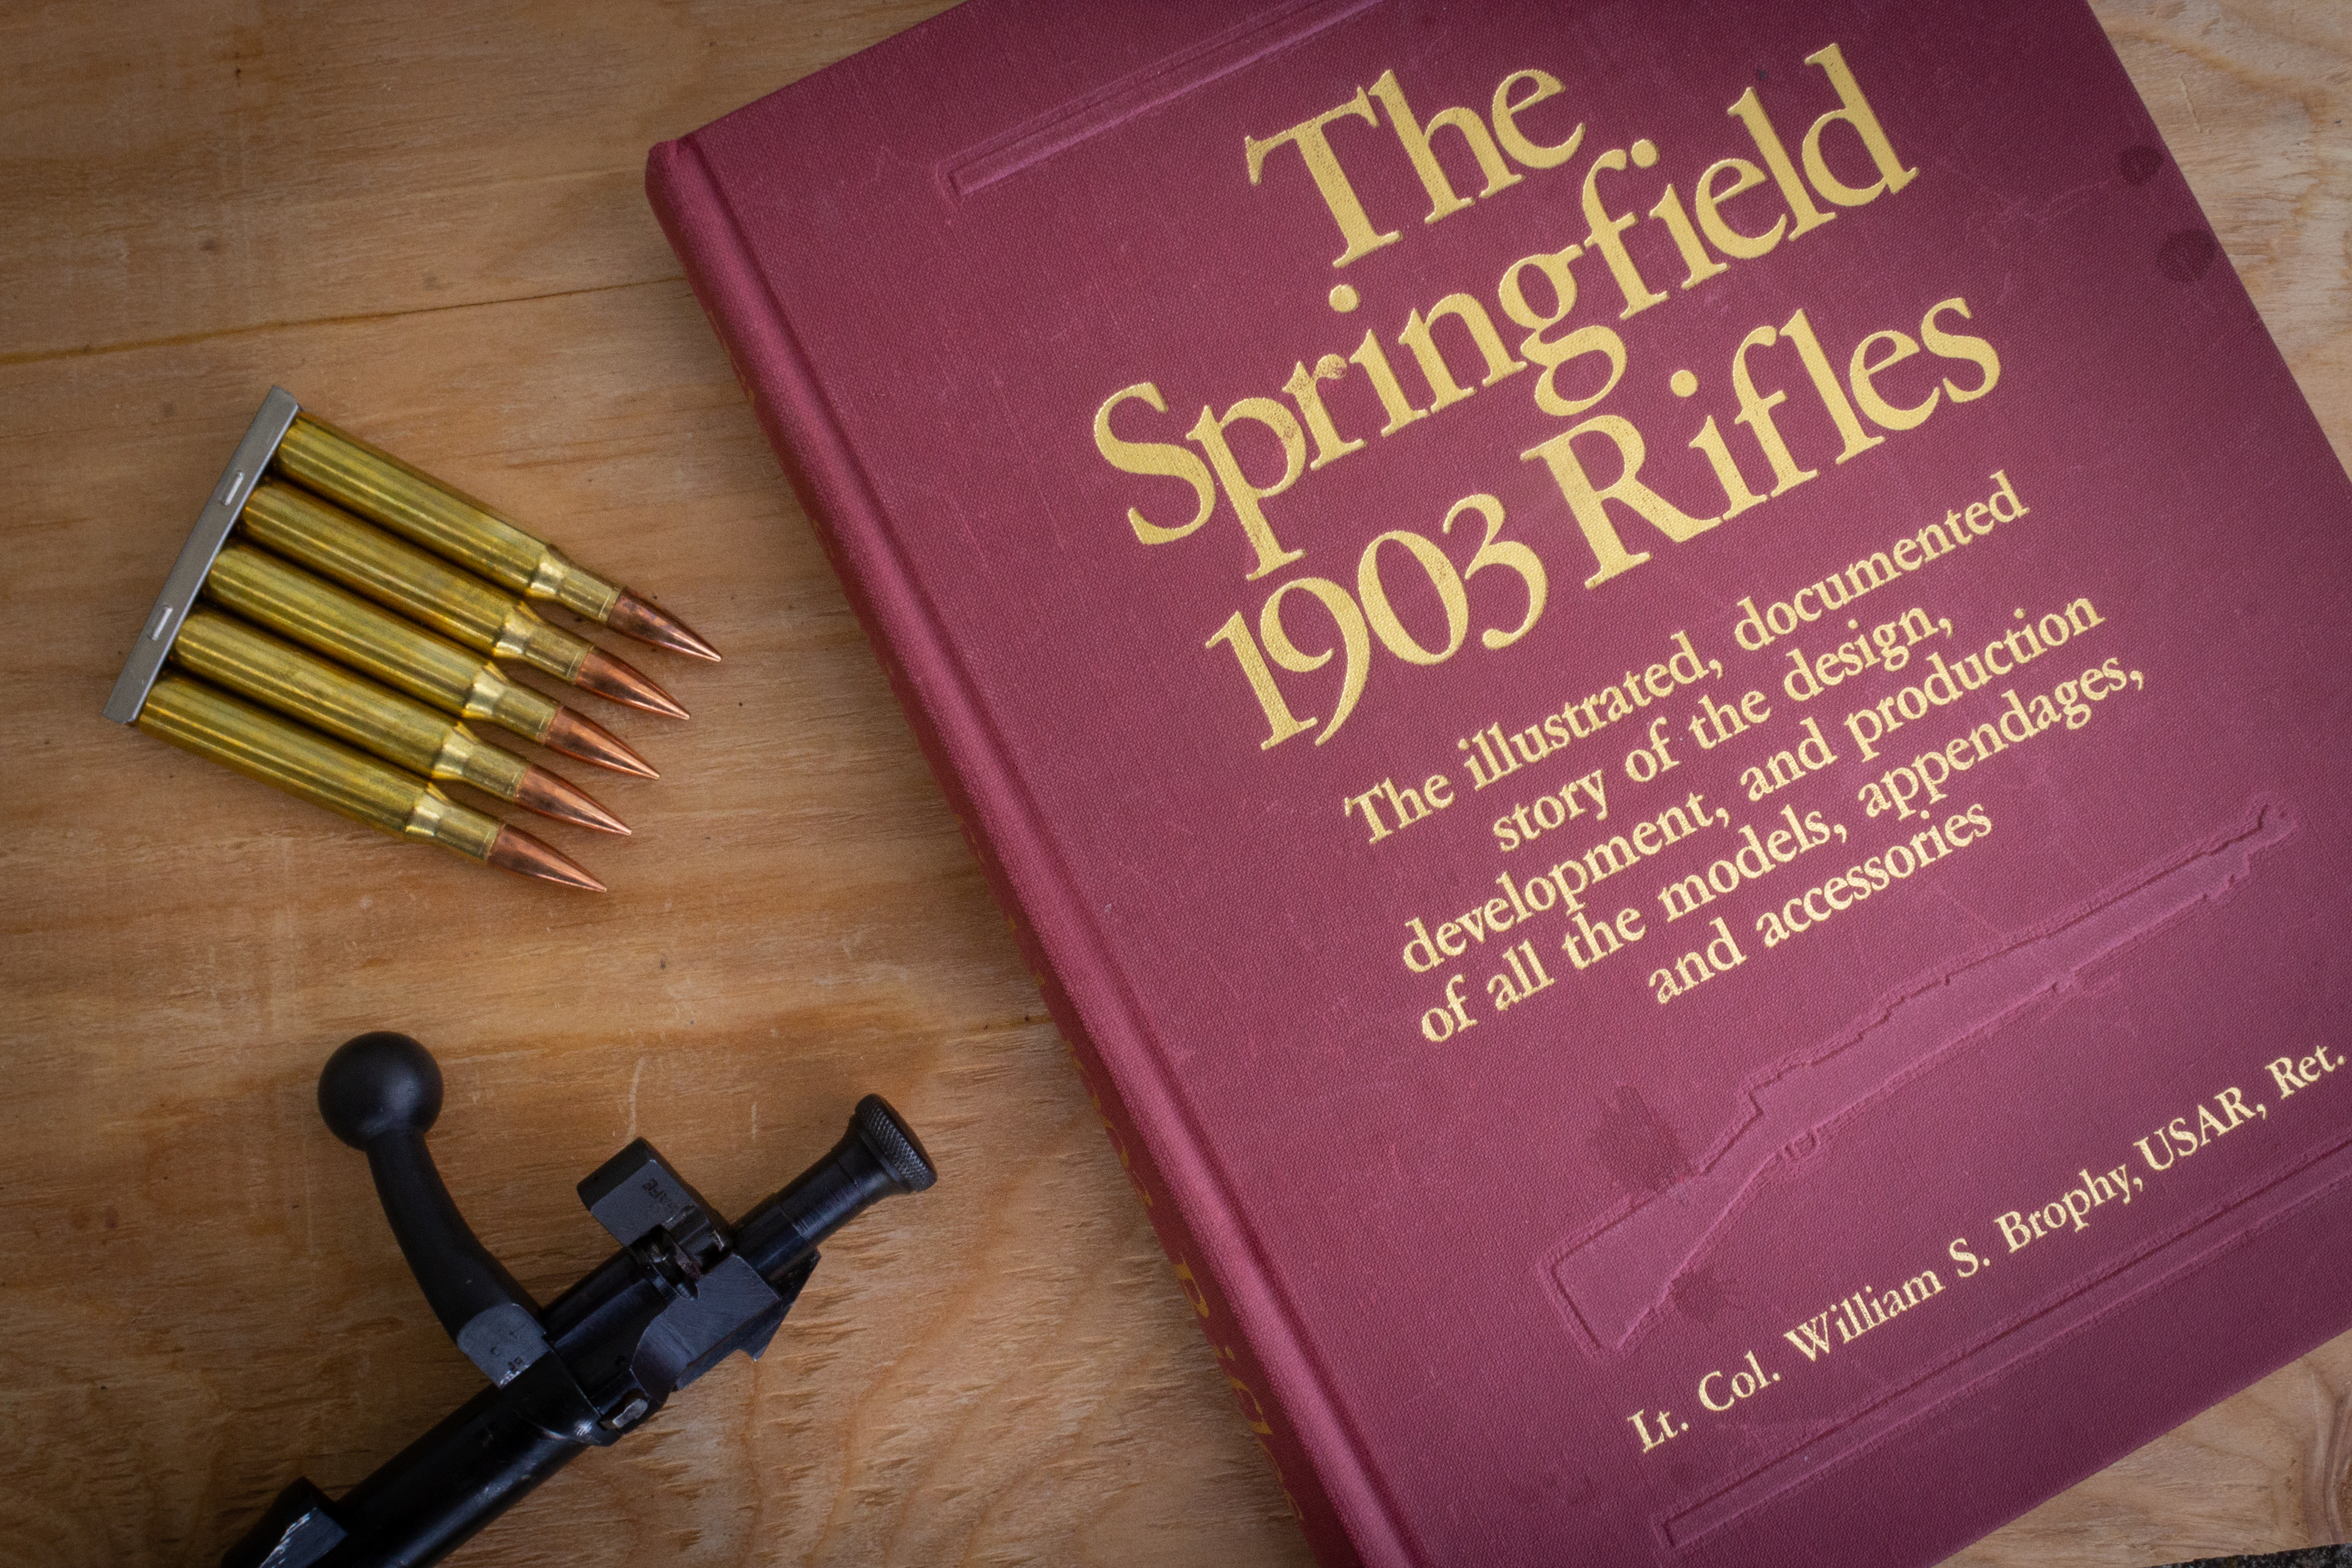 Springfield 1903 Rifle, safe heat-treatment